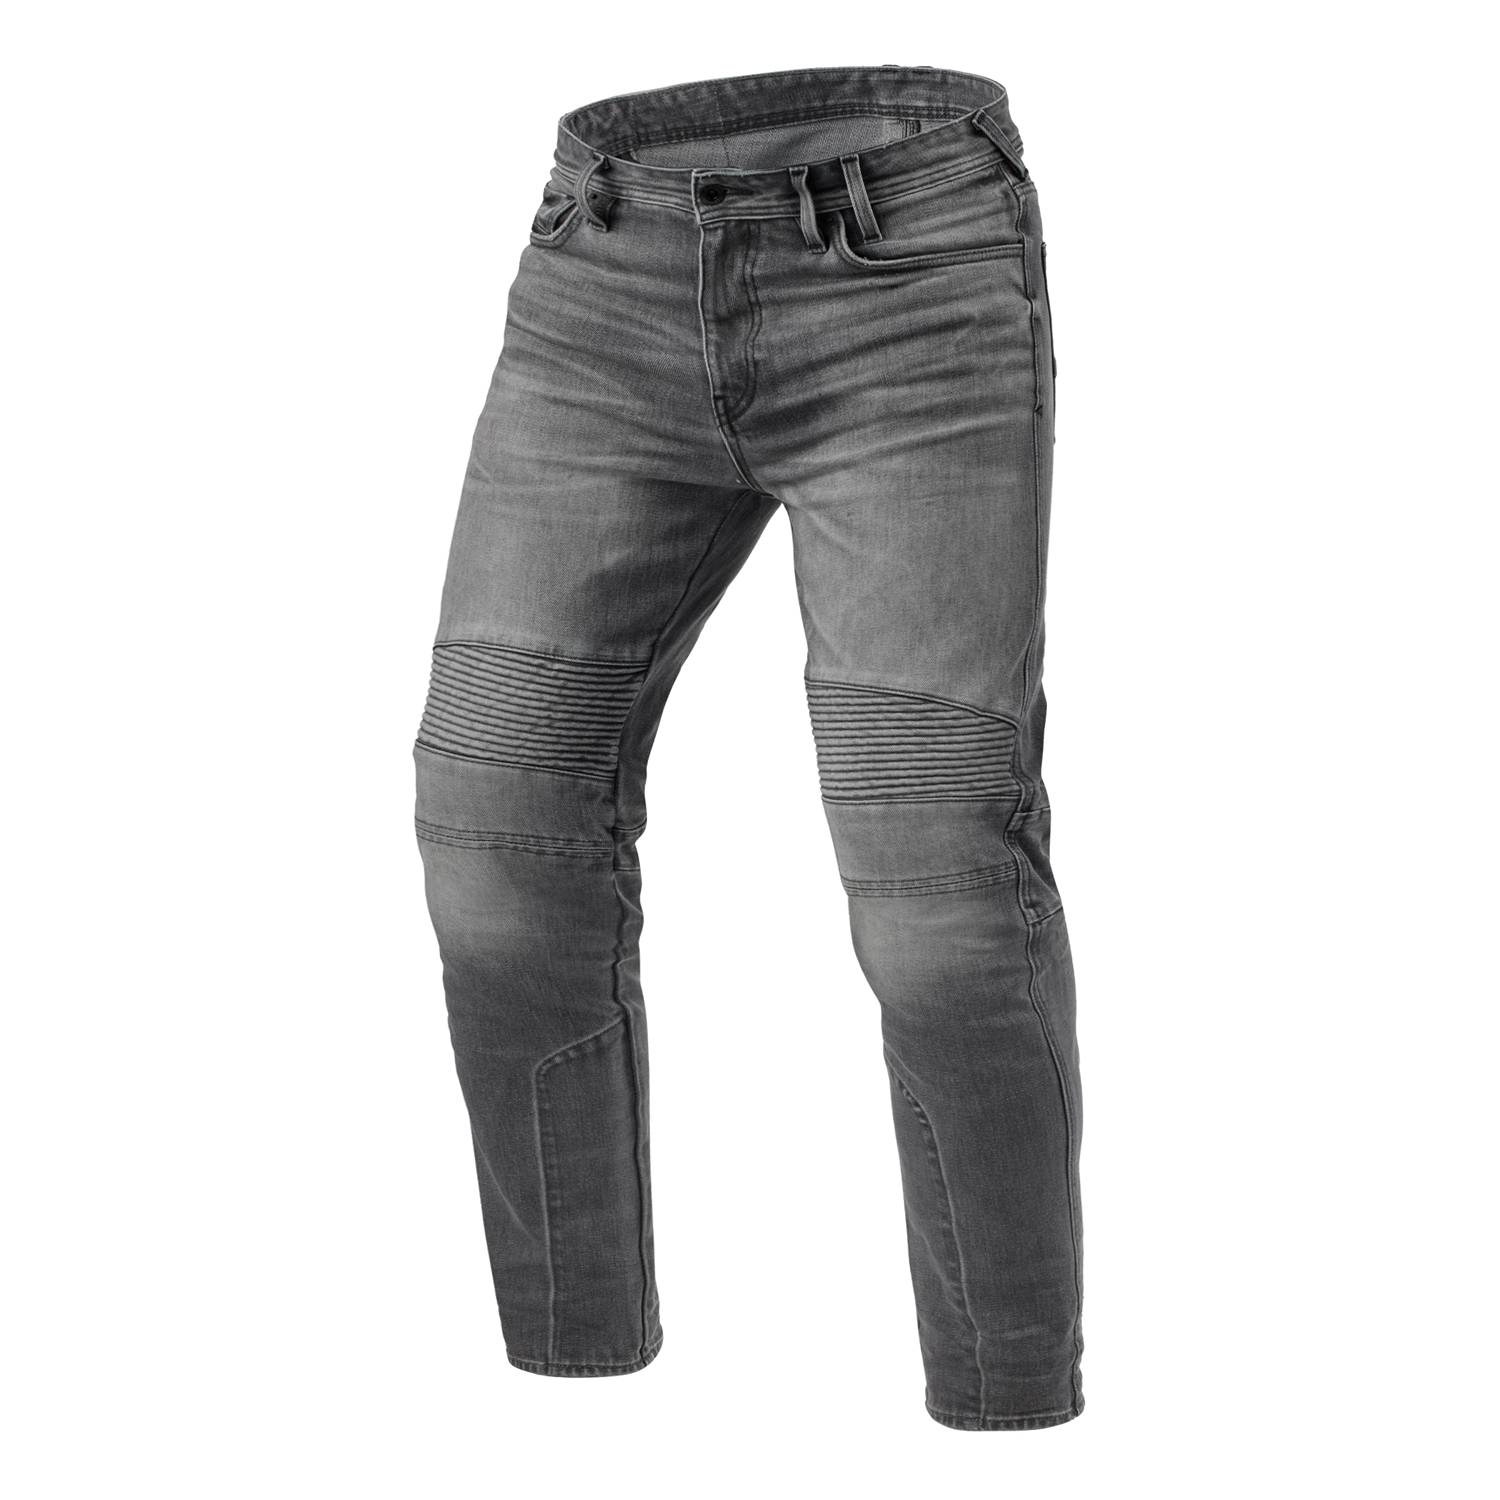 Image of REV'IT! Jeans Moto 2 TF Medium Grey Used L34 Motorcycle Jeans Größe L34/W31